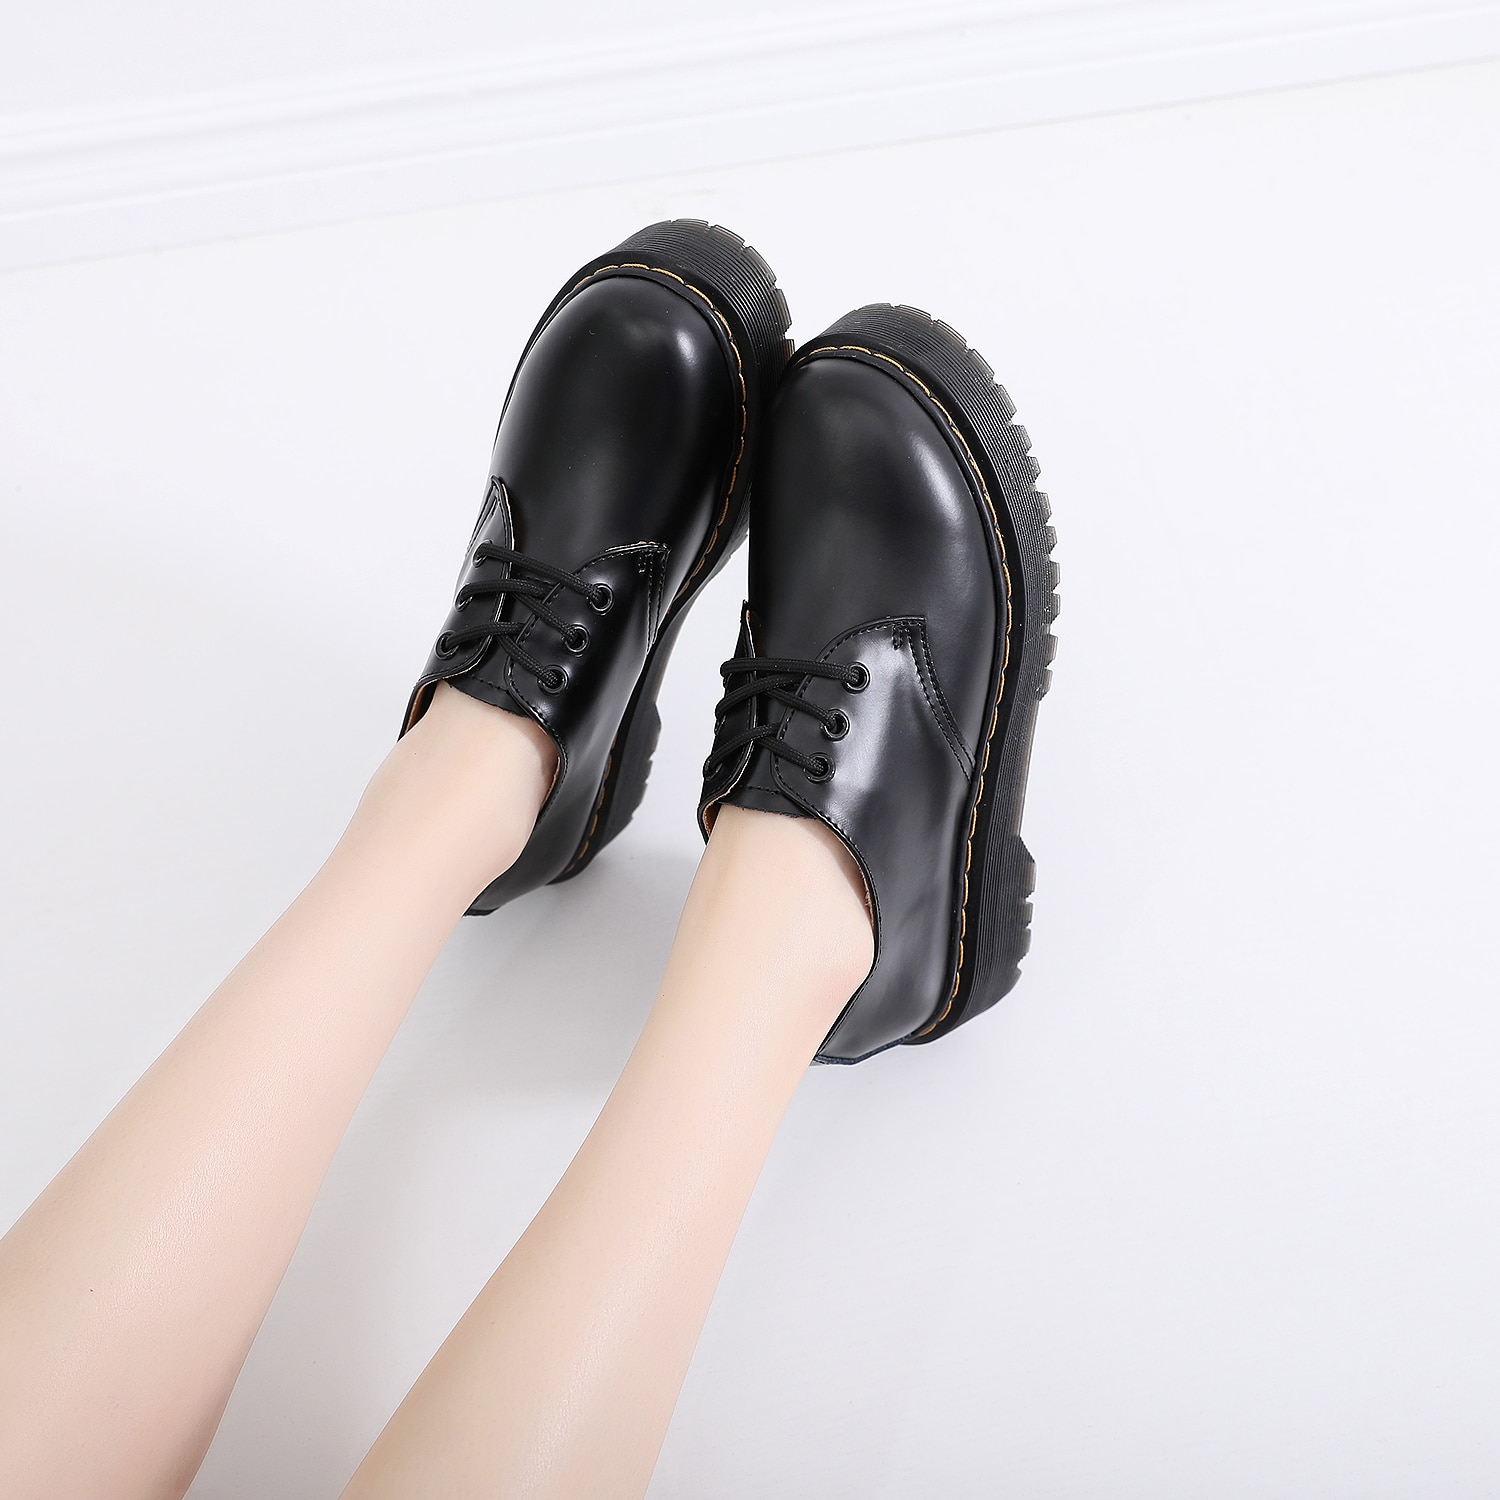 Japanese Women's Shoes Oxford Platform Shoes Casual Leather Fashion British Rubber Lady's Dress Platform Heels